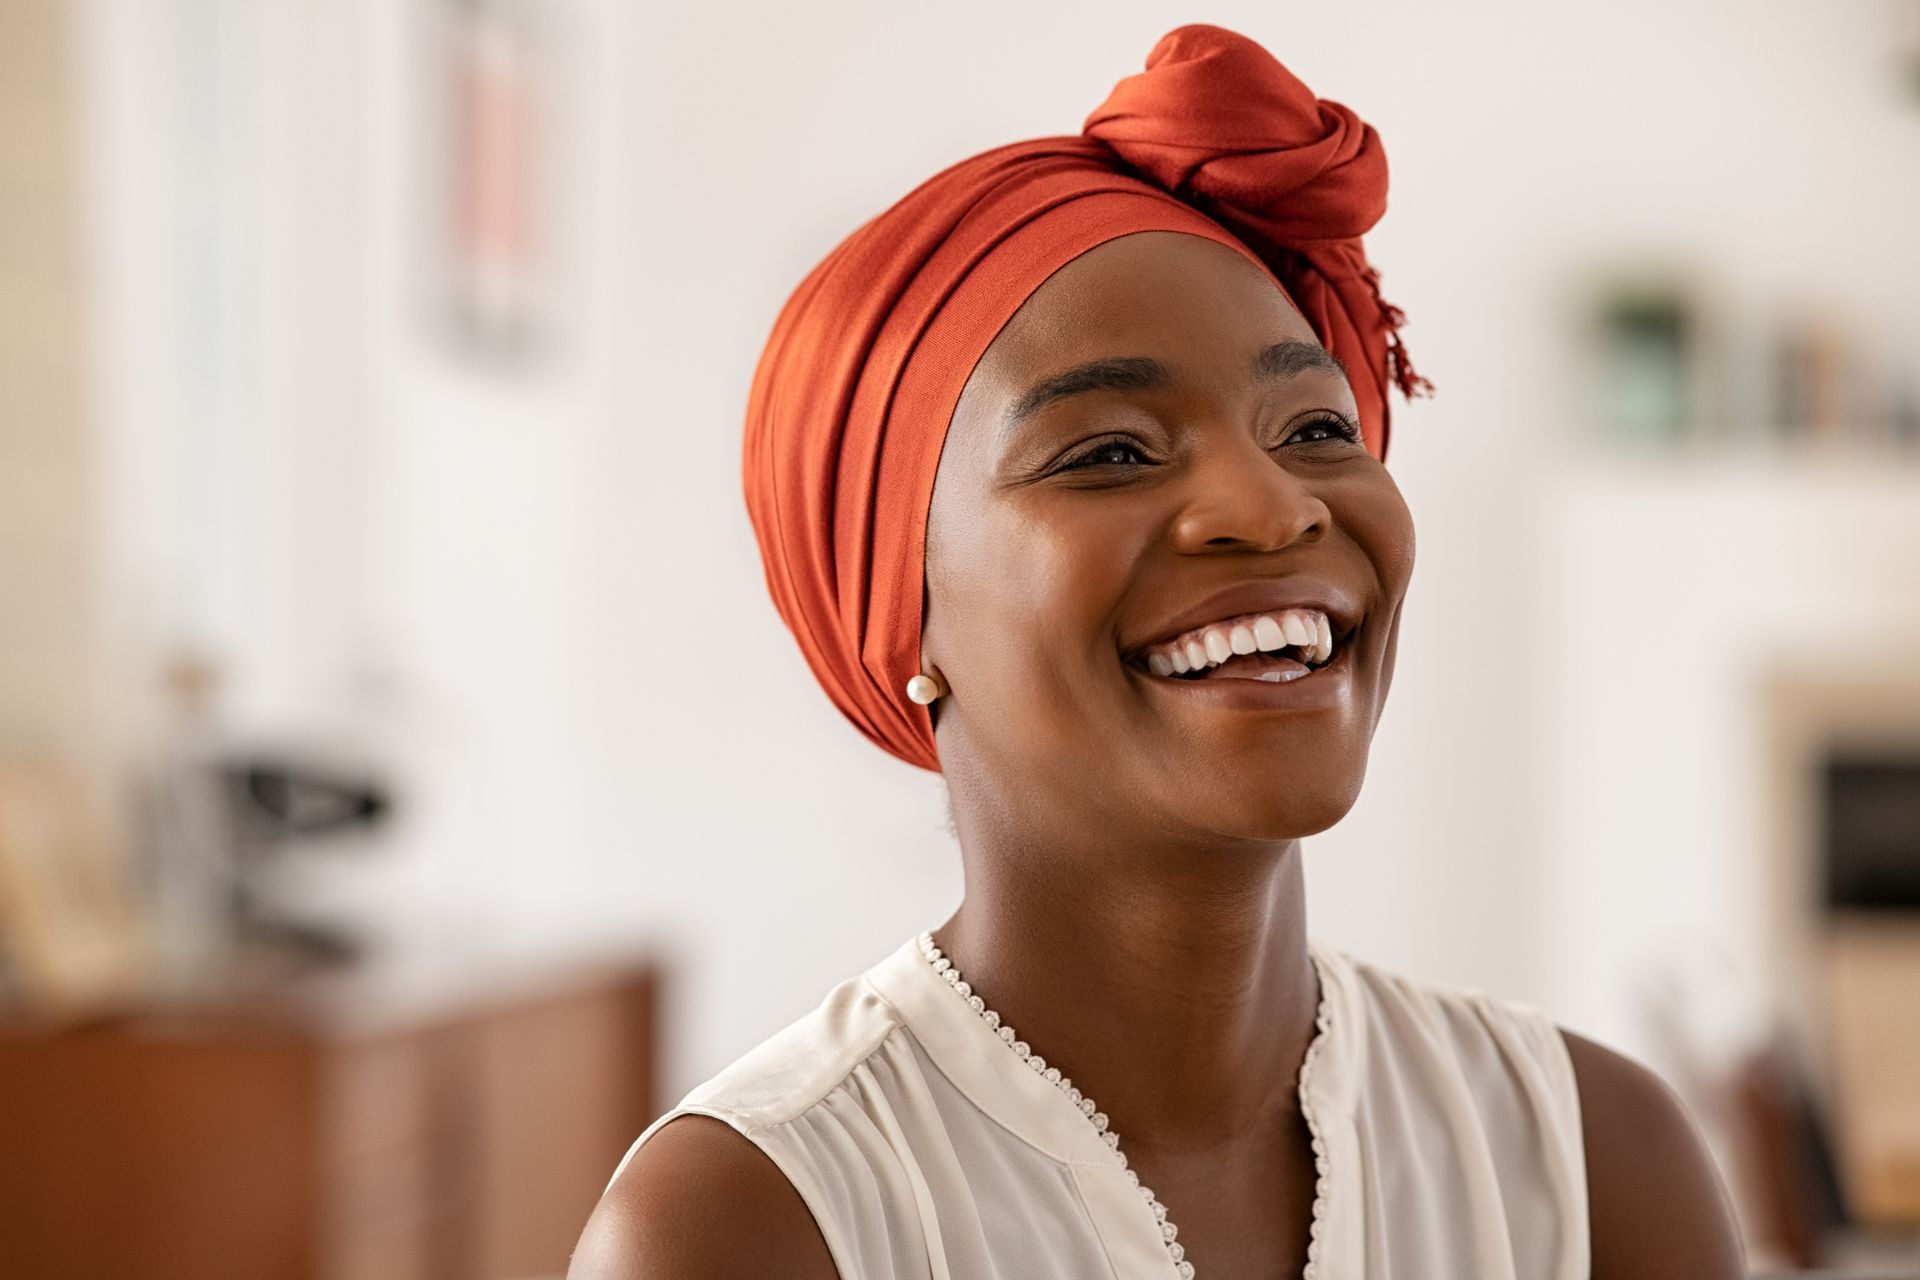 a woman wearing an orange head scarf is smiling .